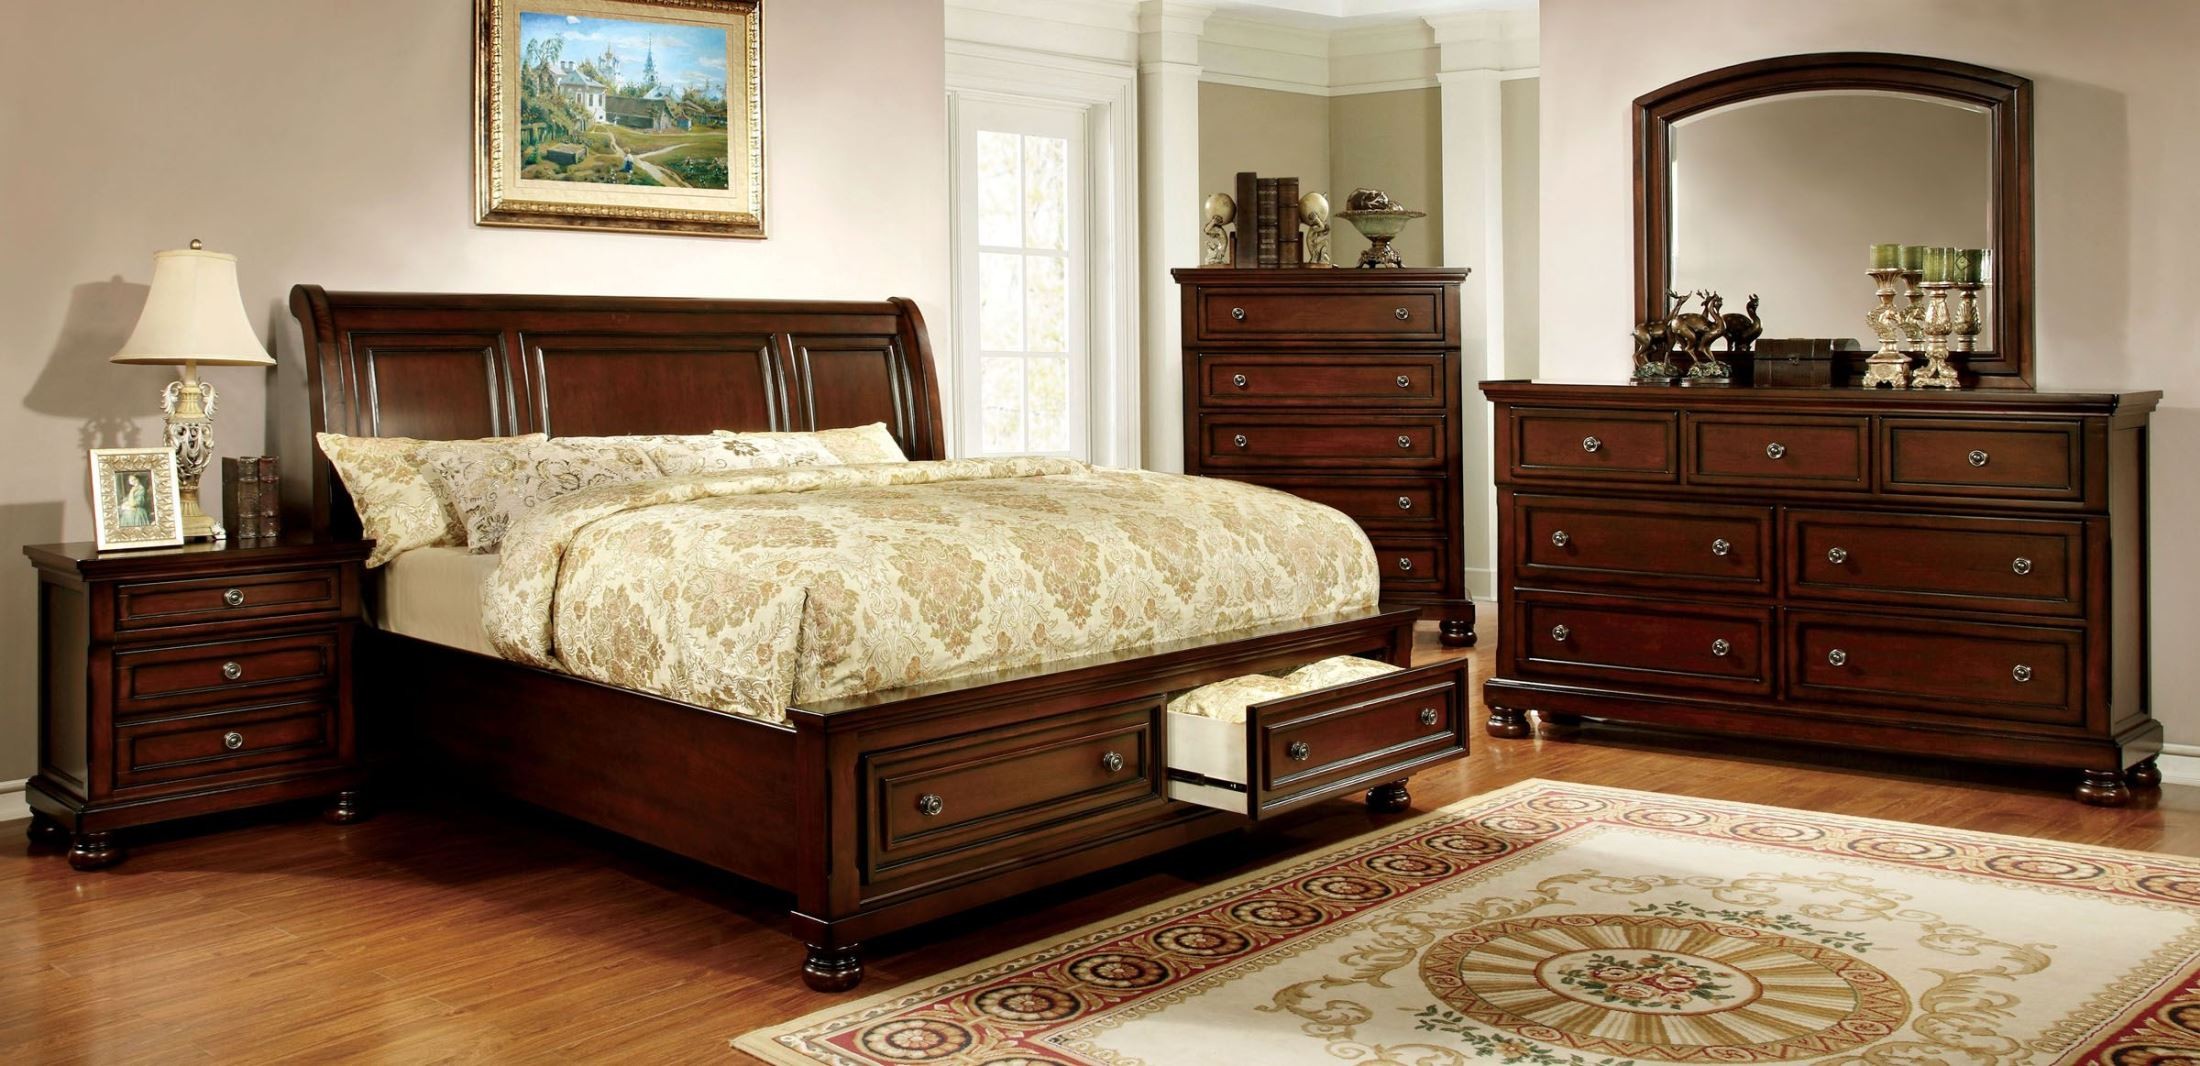 bedroom furniture set king size cherry wood